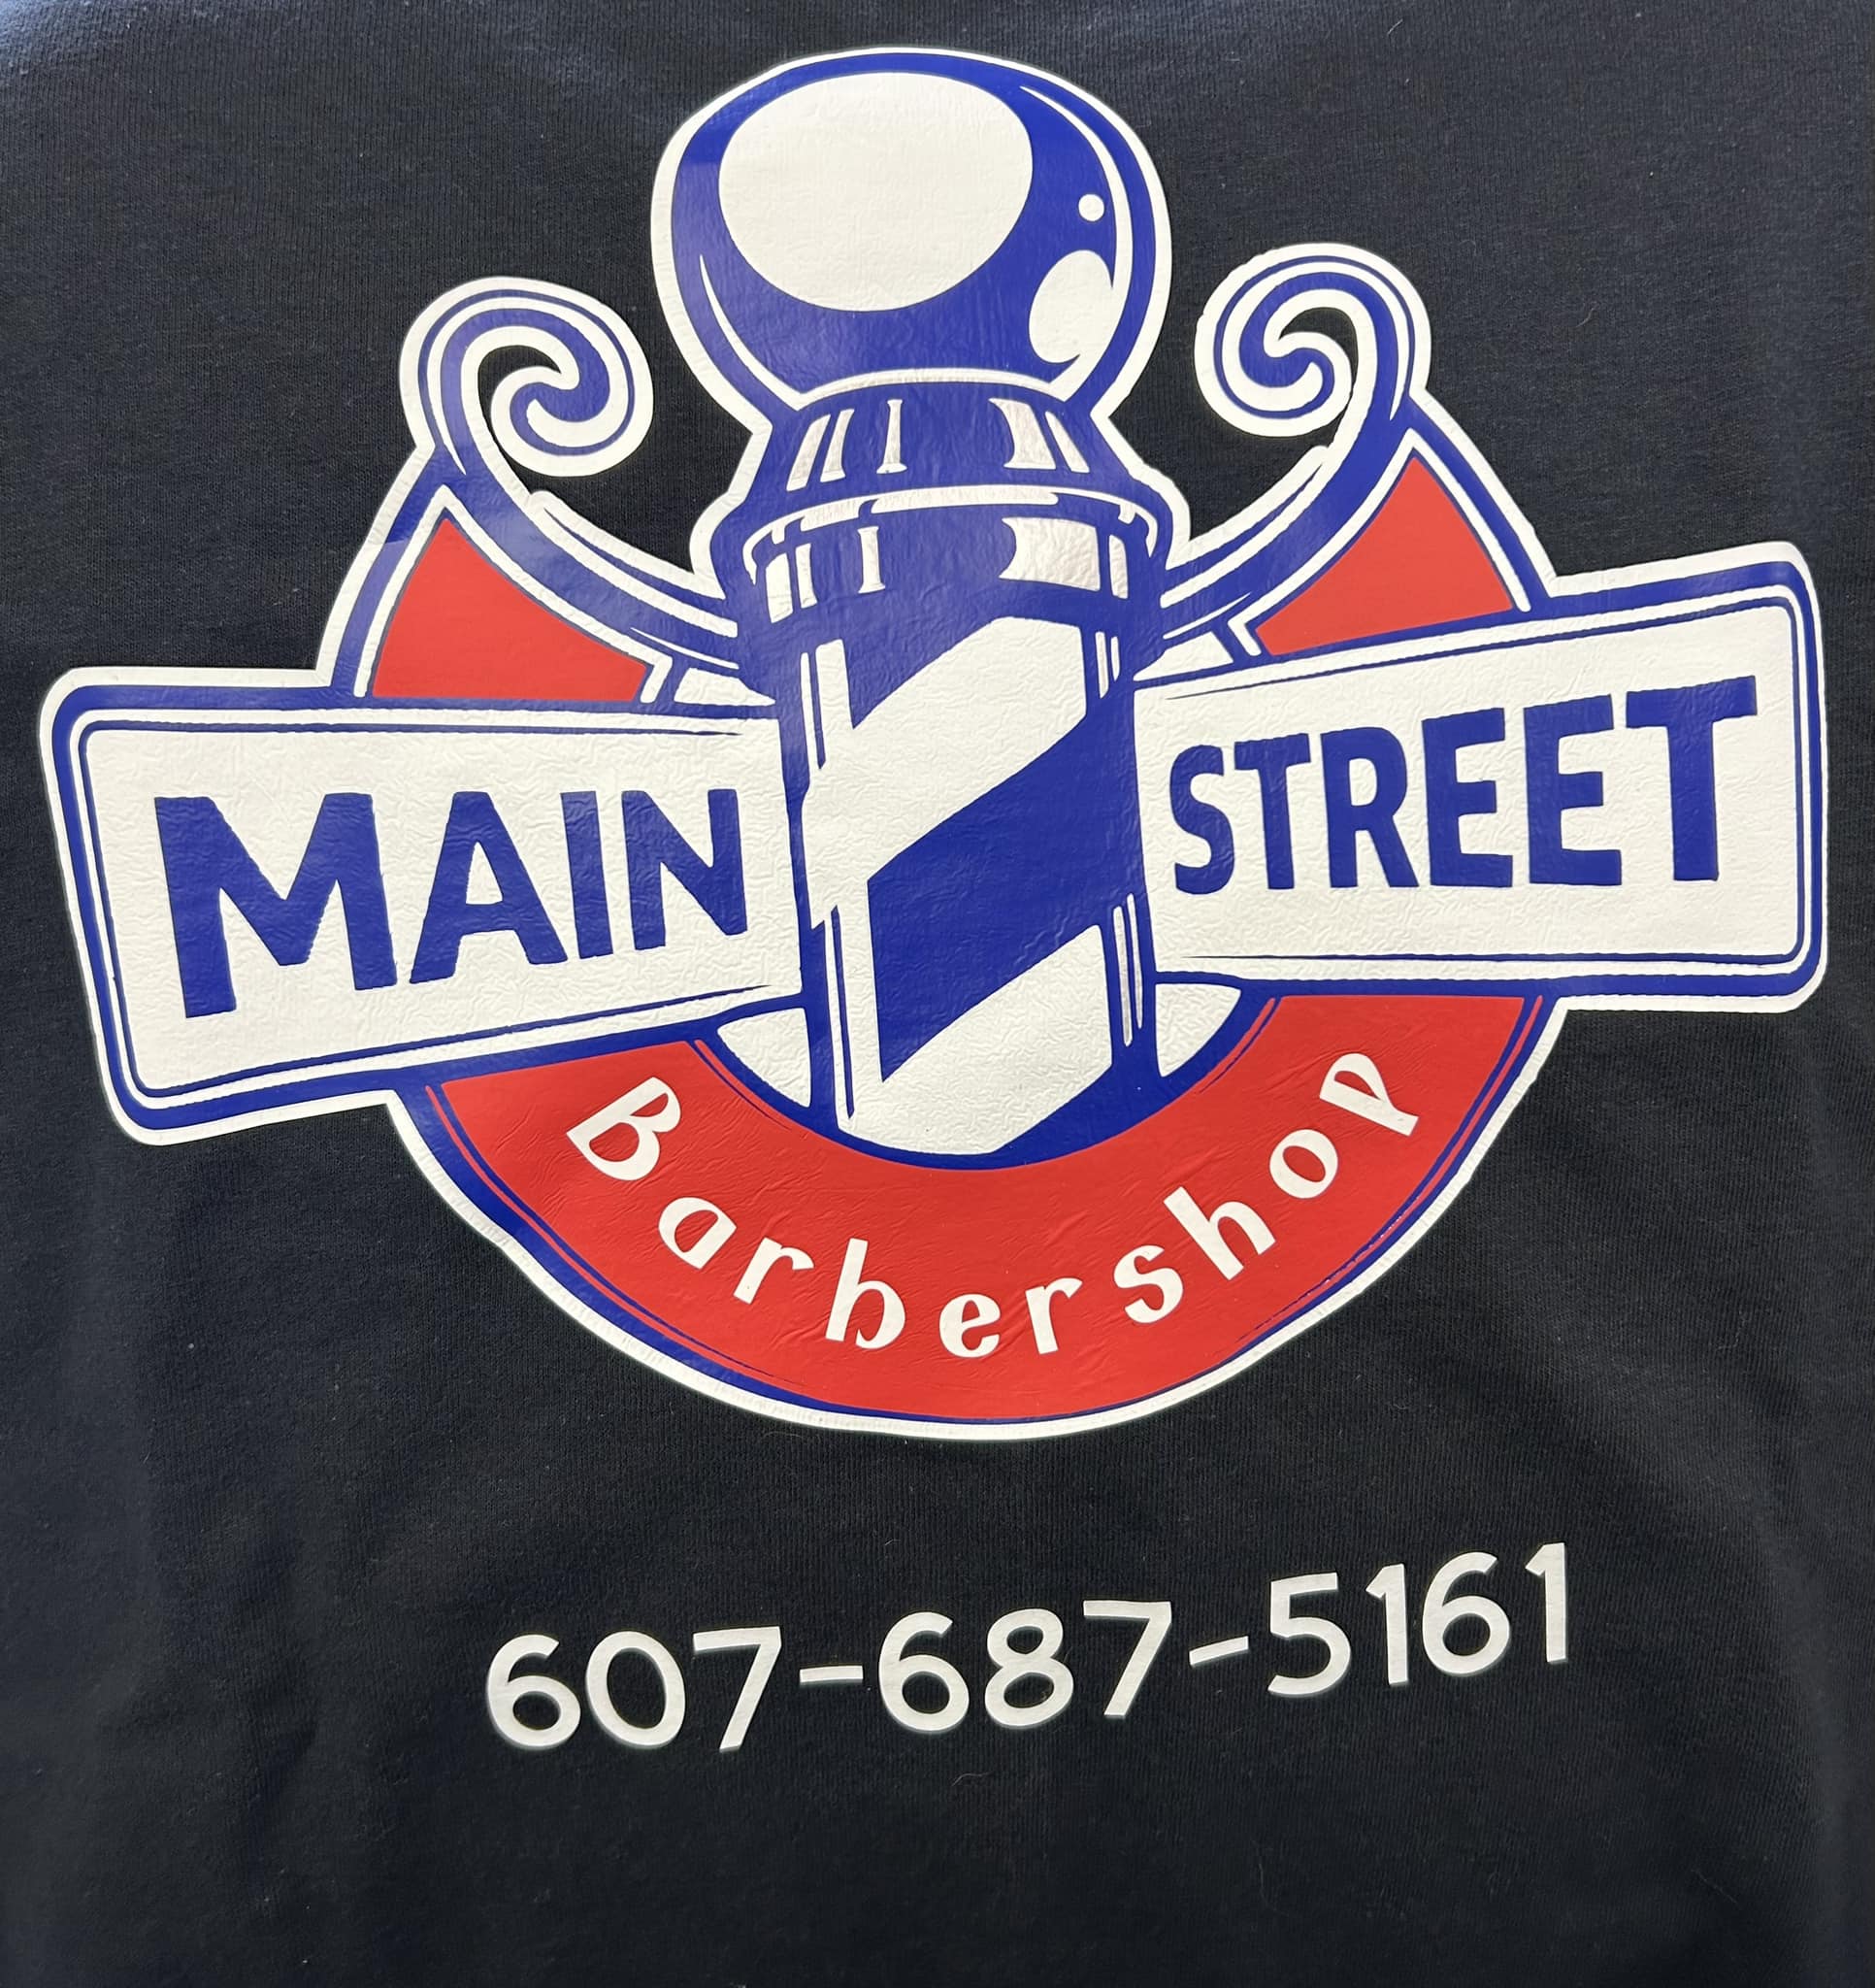 Main Street Barber Shop 138 Main St, Owego New York 13827